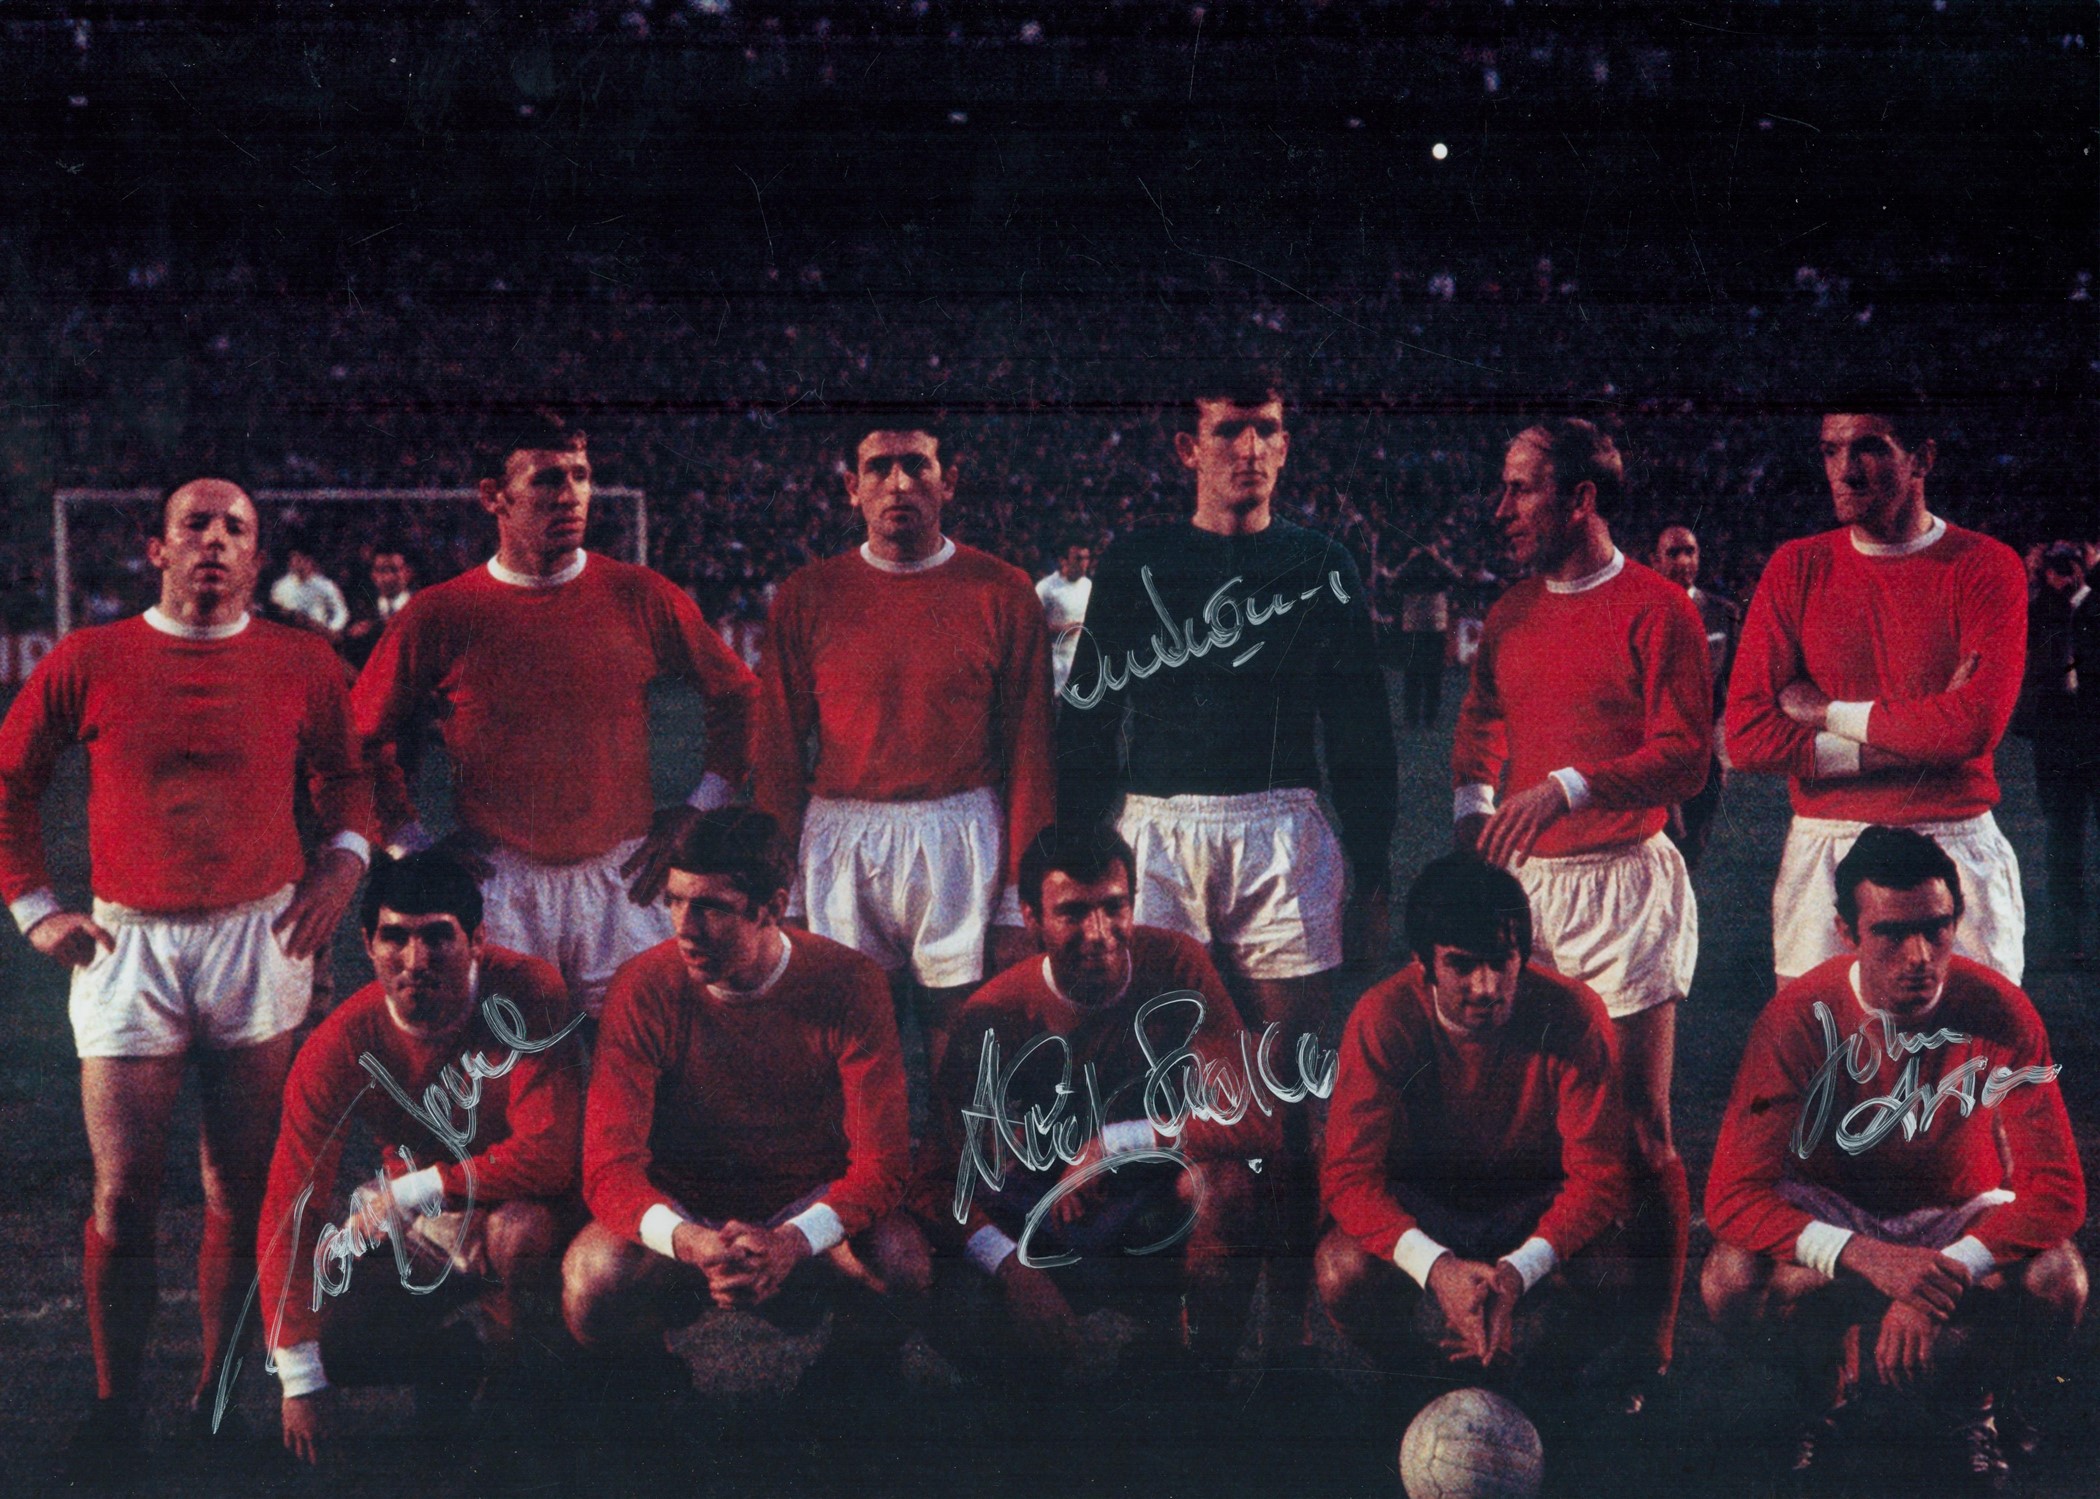 Football Manchester United 1968 European Cup multi signed 16x12 colour photo 4 fantastic